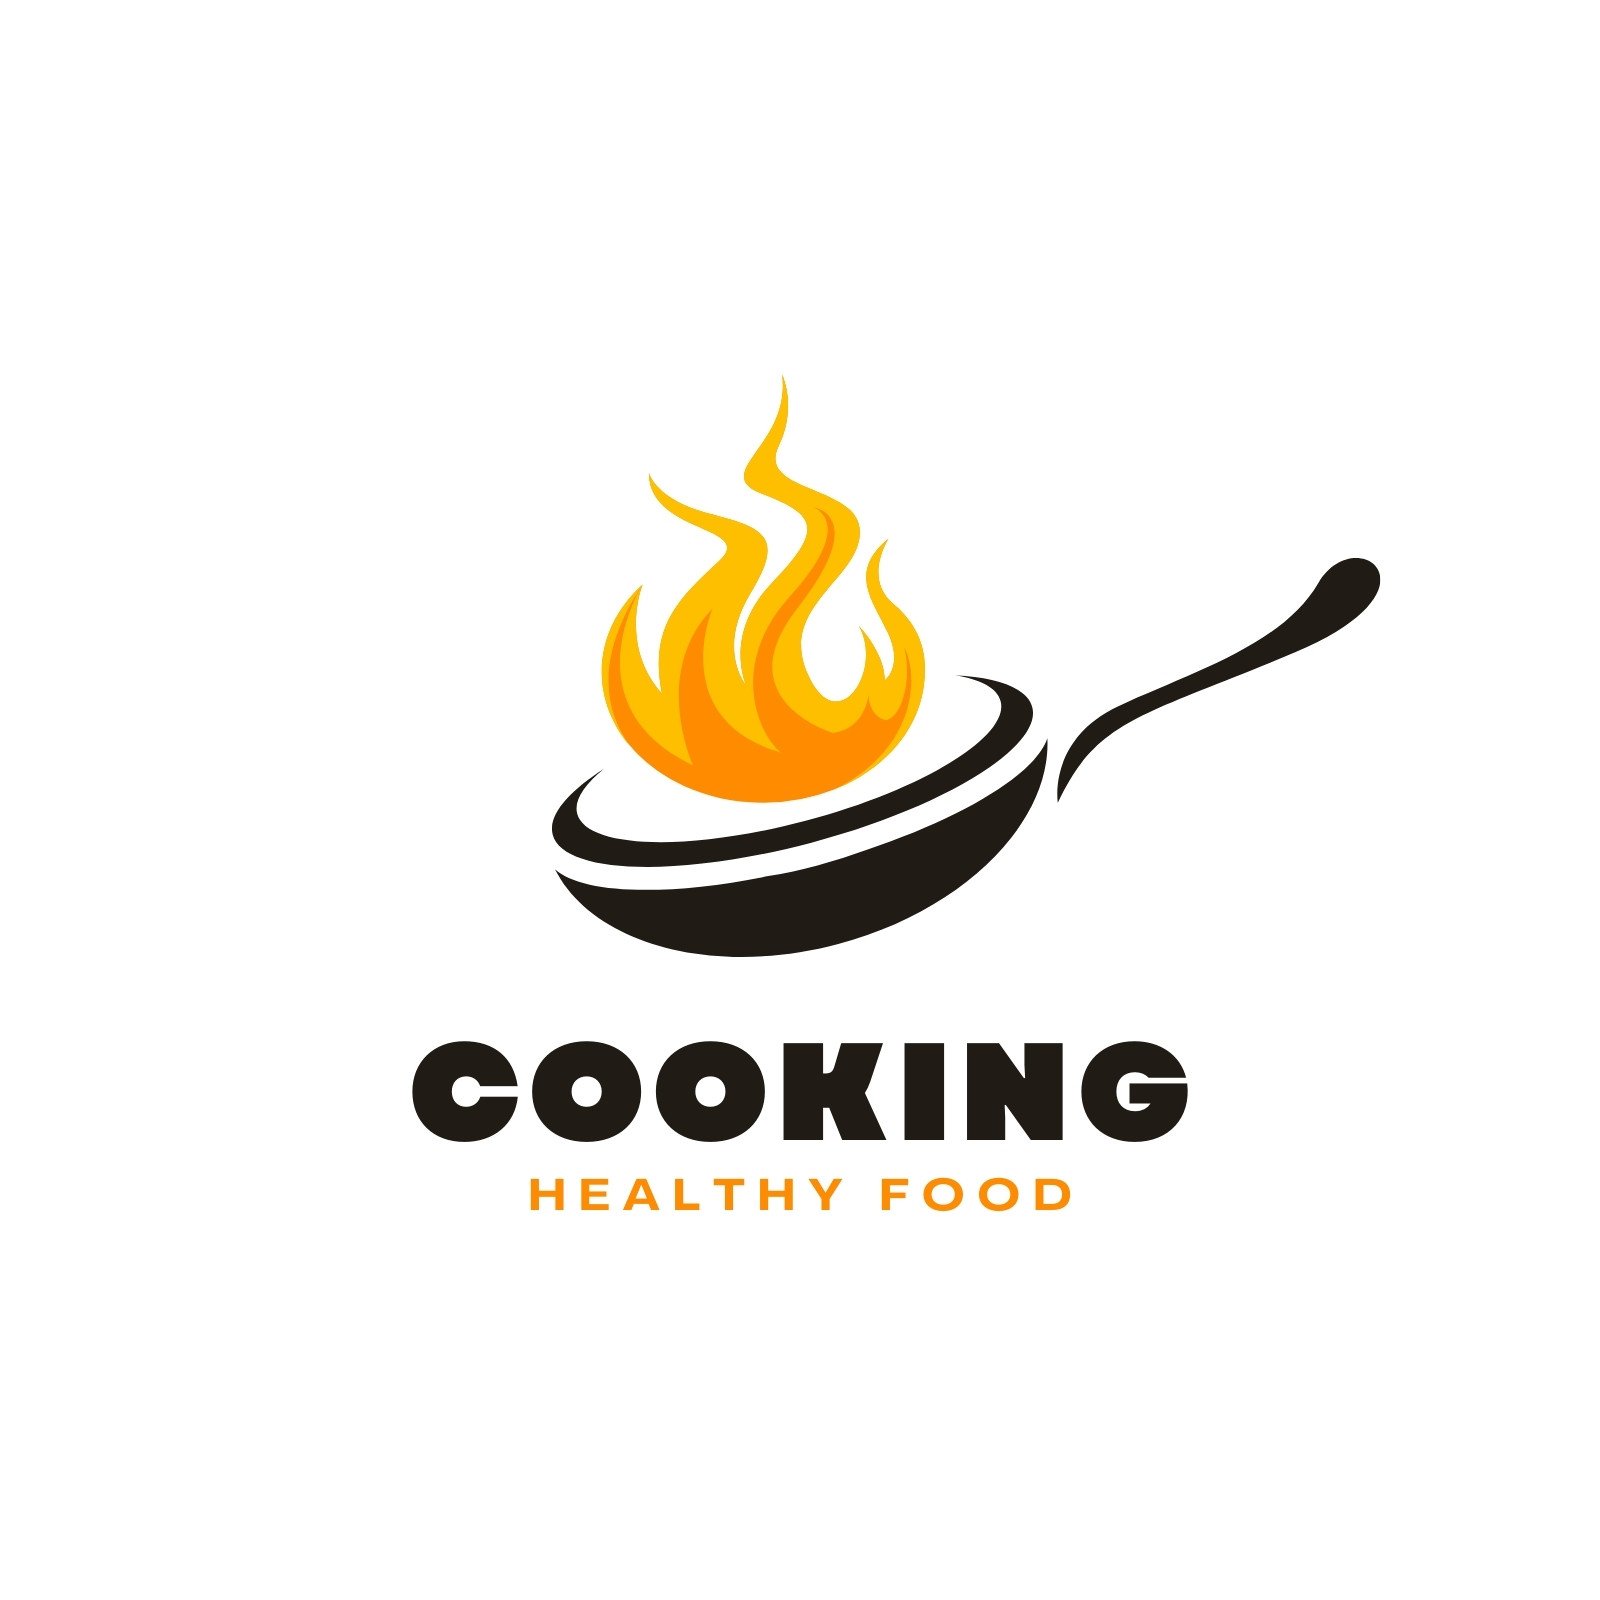 https://marketplace.canva.com/EAFaFUz4aKo/2/0/1600w/canva-yellow-abstract-cooking-fire-free-logo-JmYWTjUsE-Q.jpg